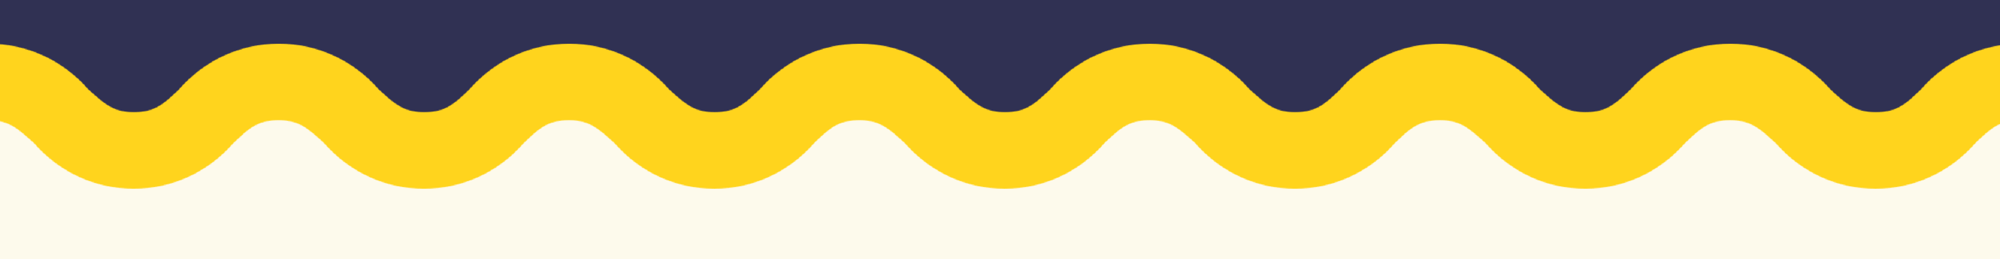 Minderful_yellow_wave